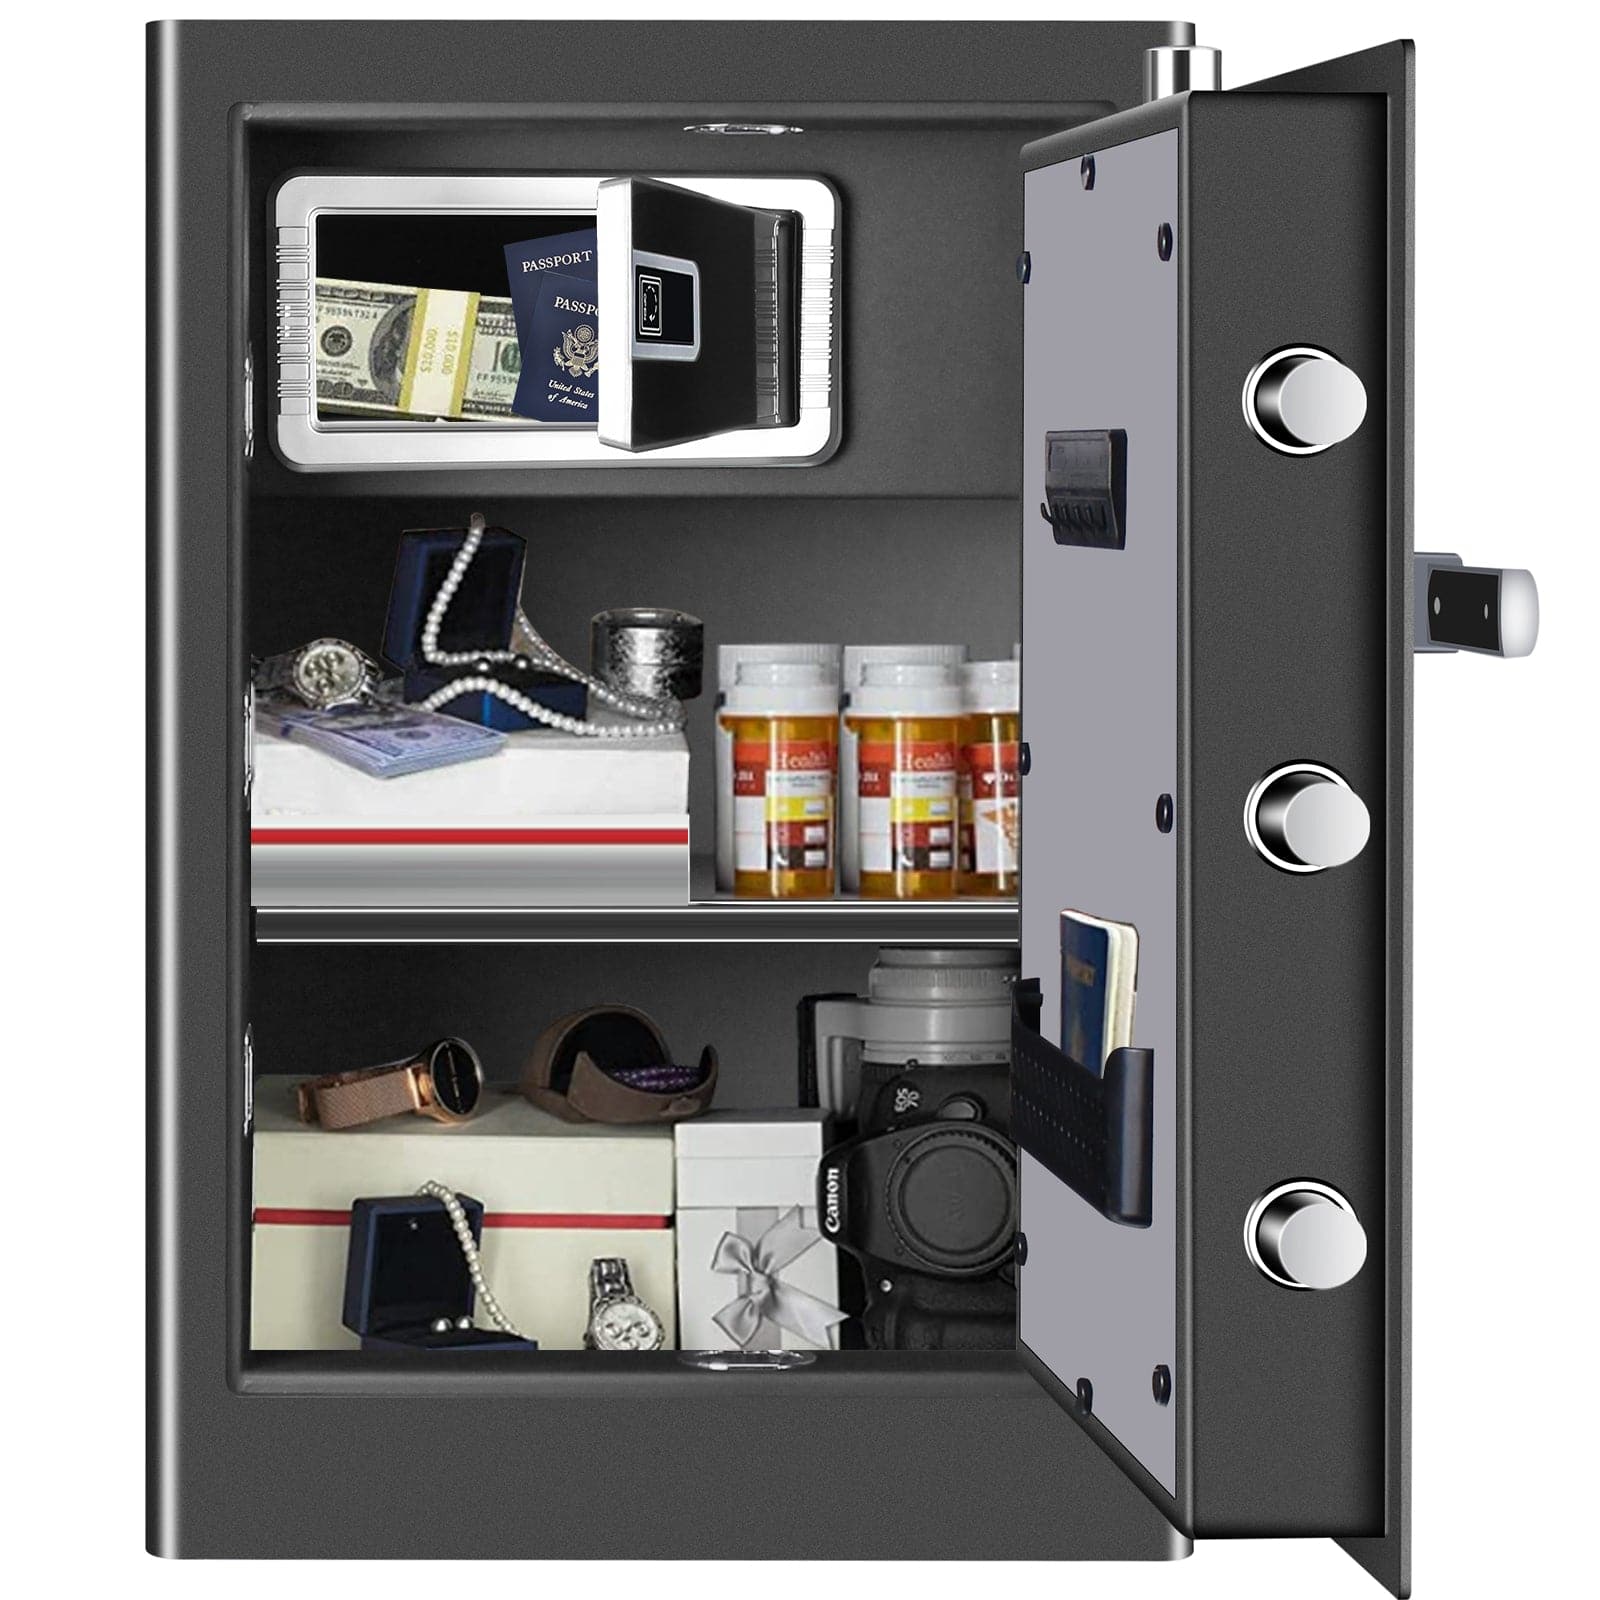 Biometric Fireproof Cabinet Home Safe - LACS002